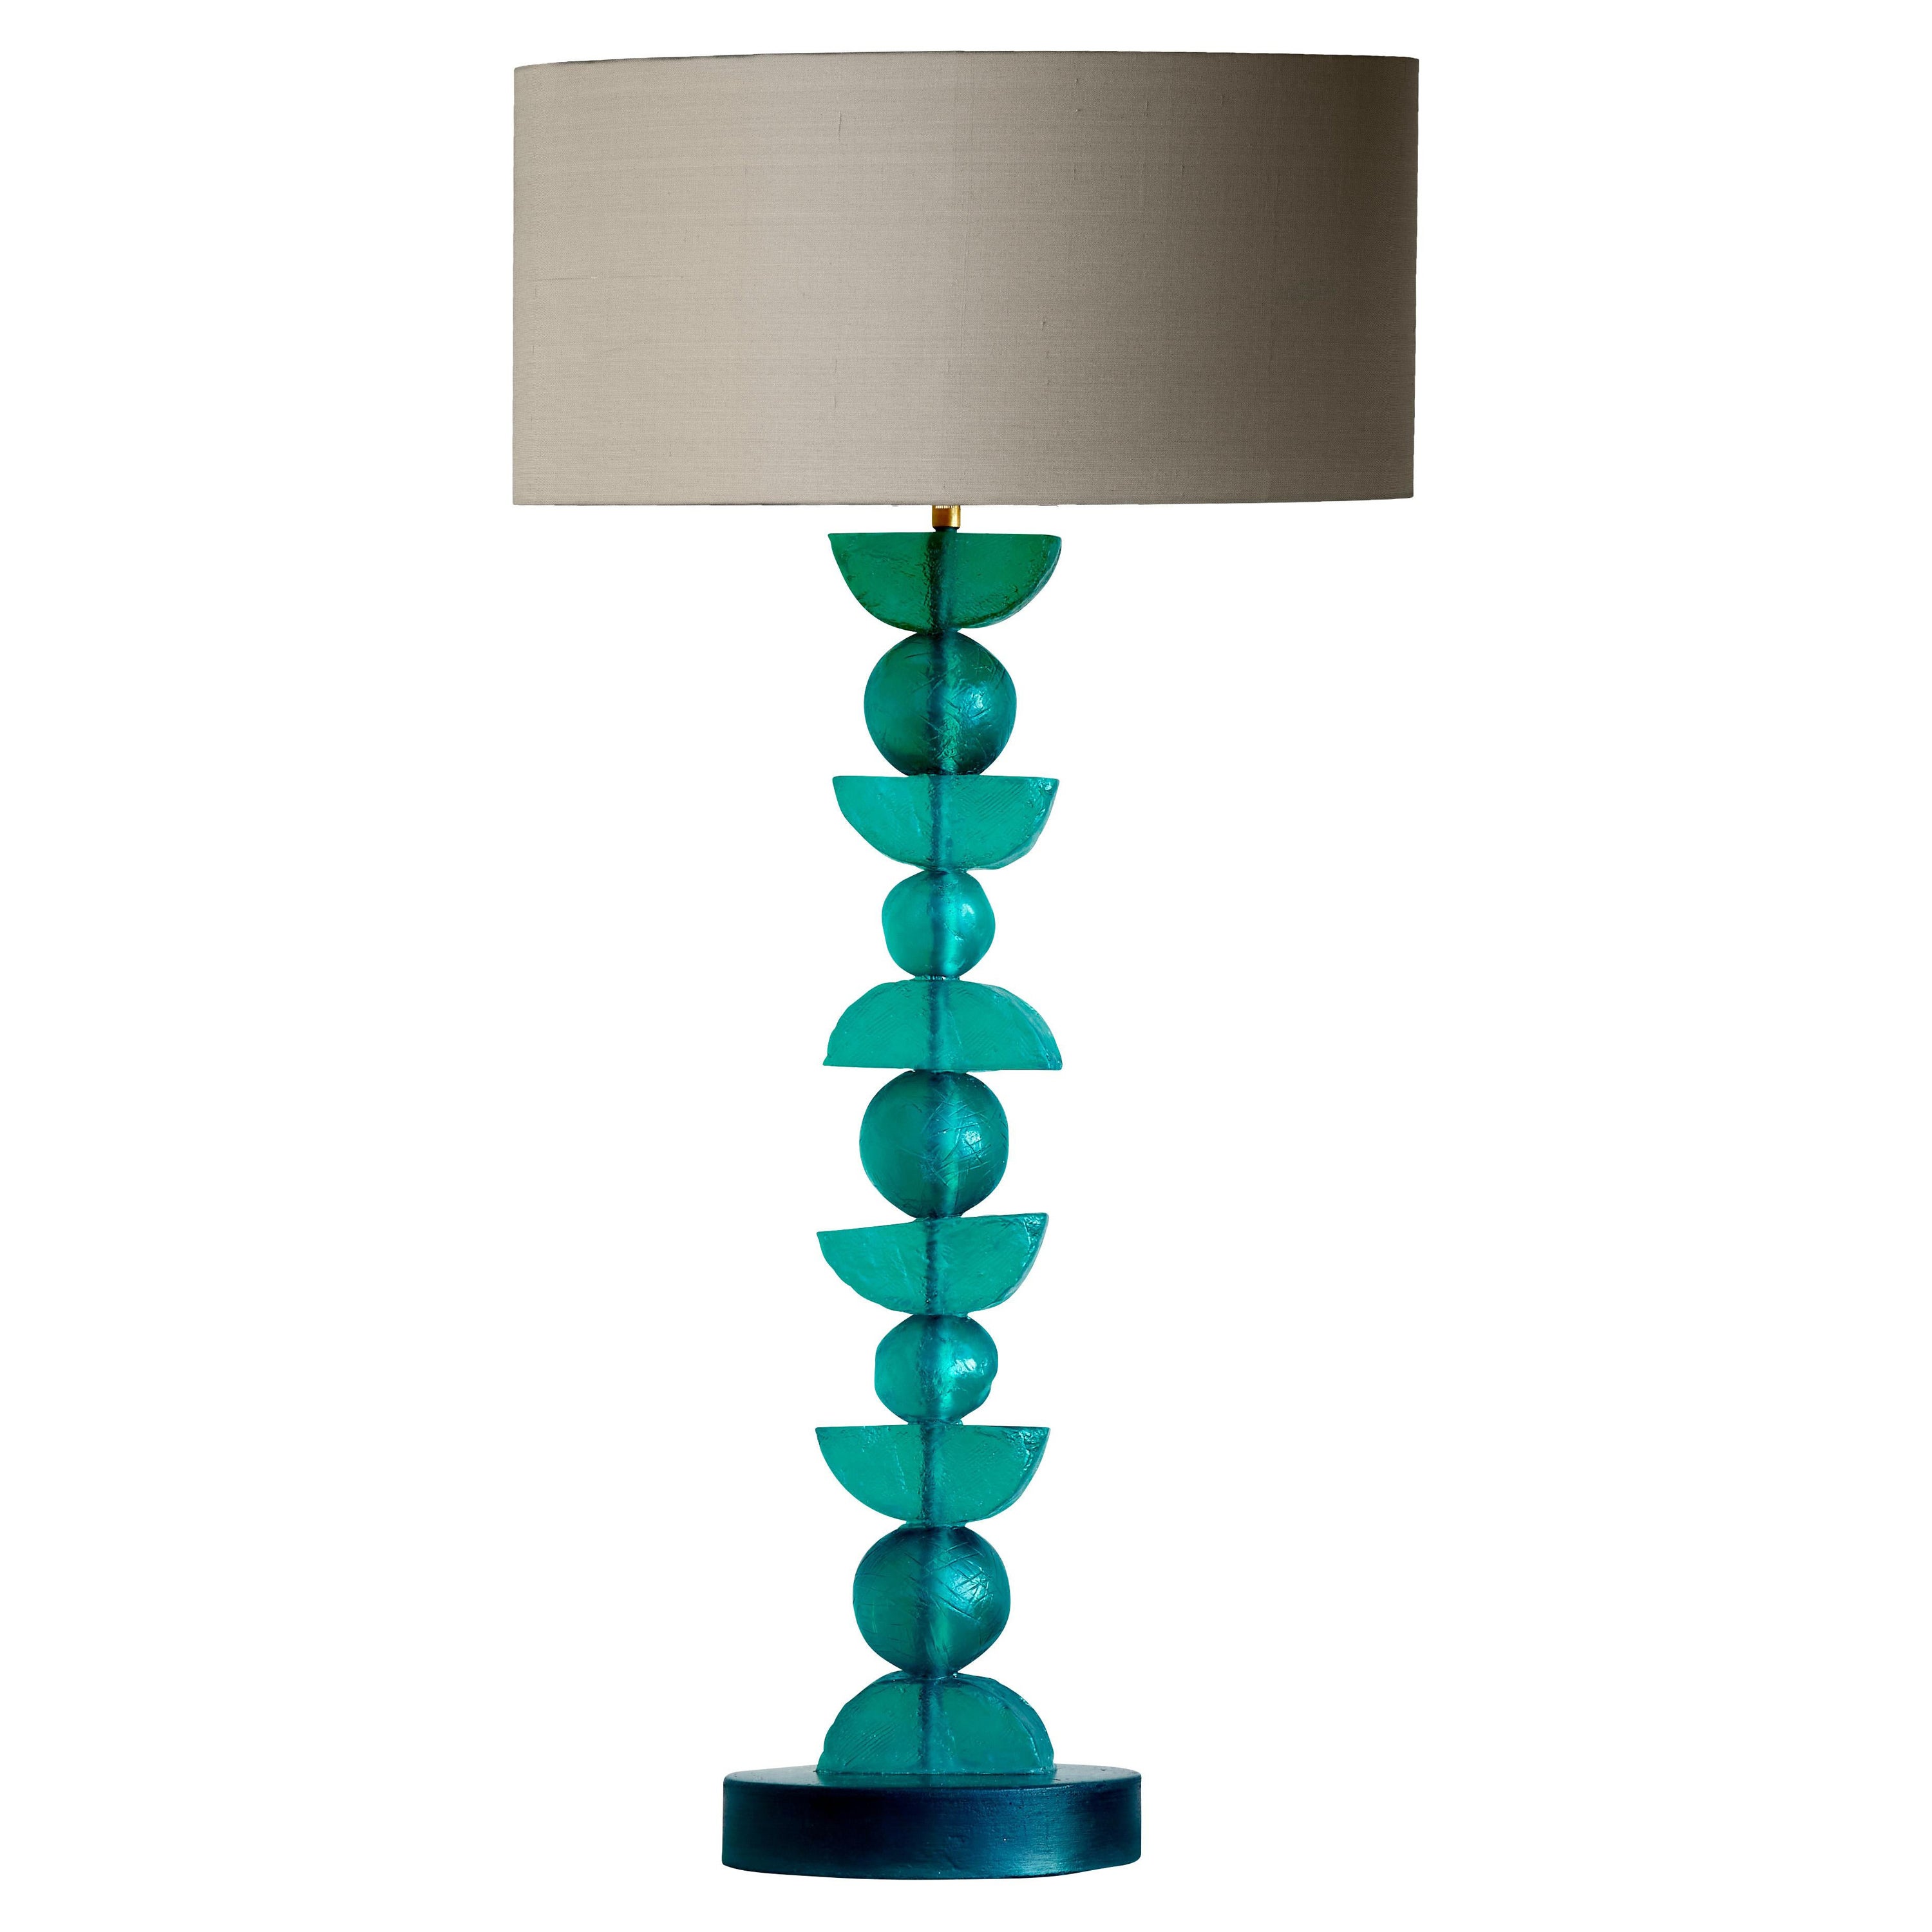 European, Silhouette Table Lamp by Margit Wittig, Green Resin